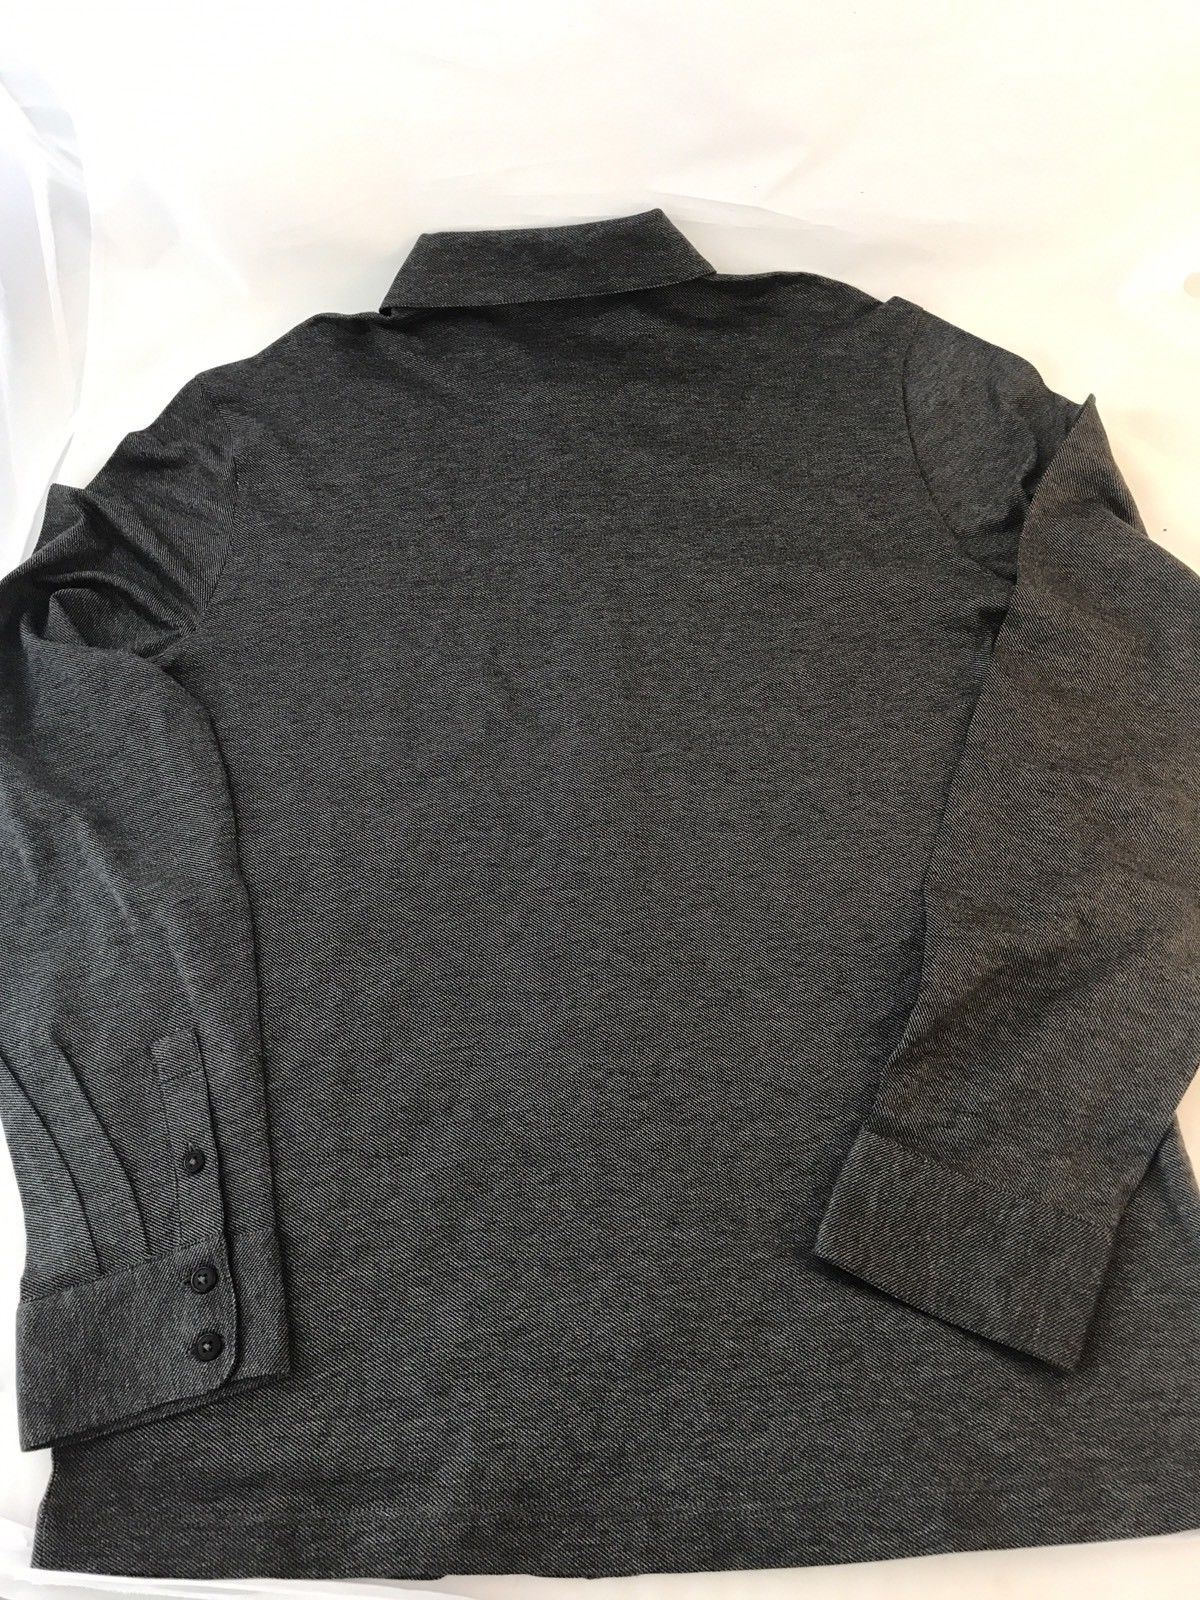 NWT $195 BOSS Hugo Boss 'Onara-01' Black Label Long Sleeve Slim Fit Gray Shirt L - BAYSUPERSTORE